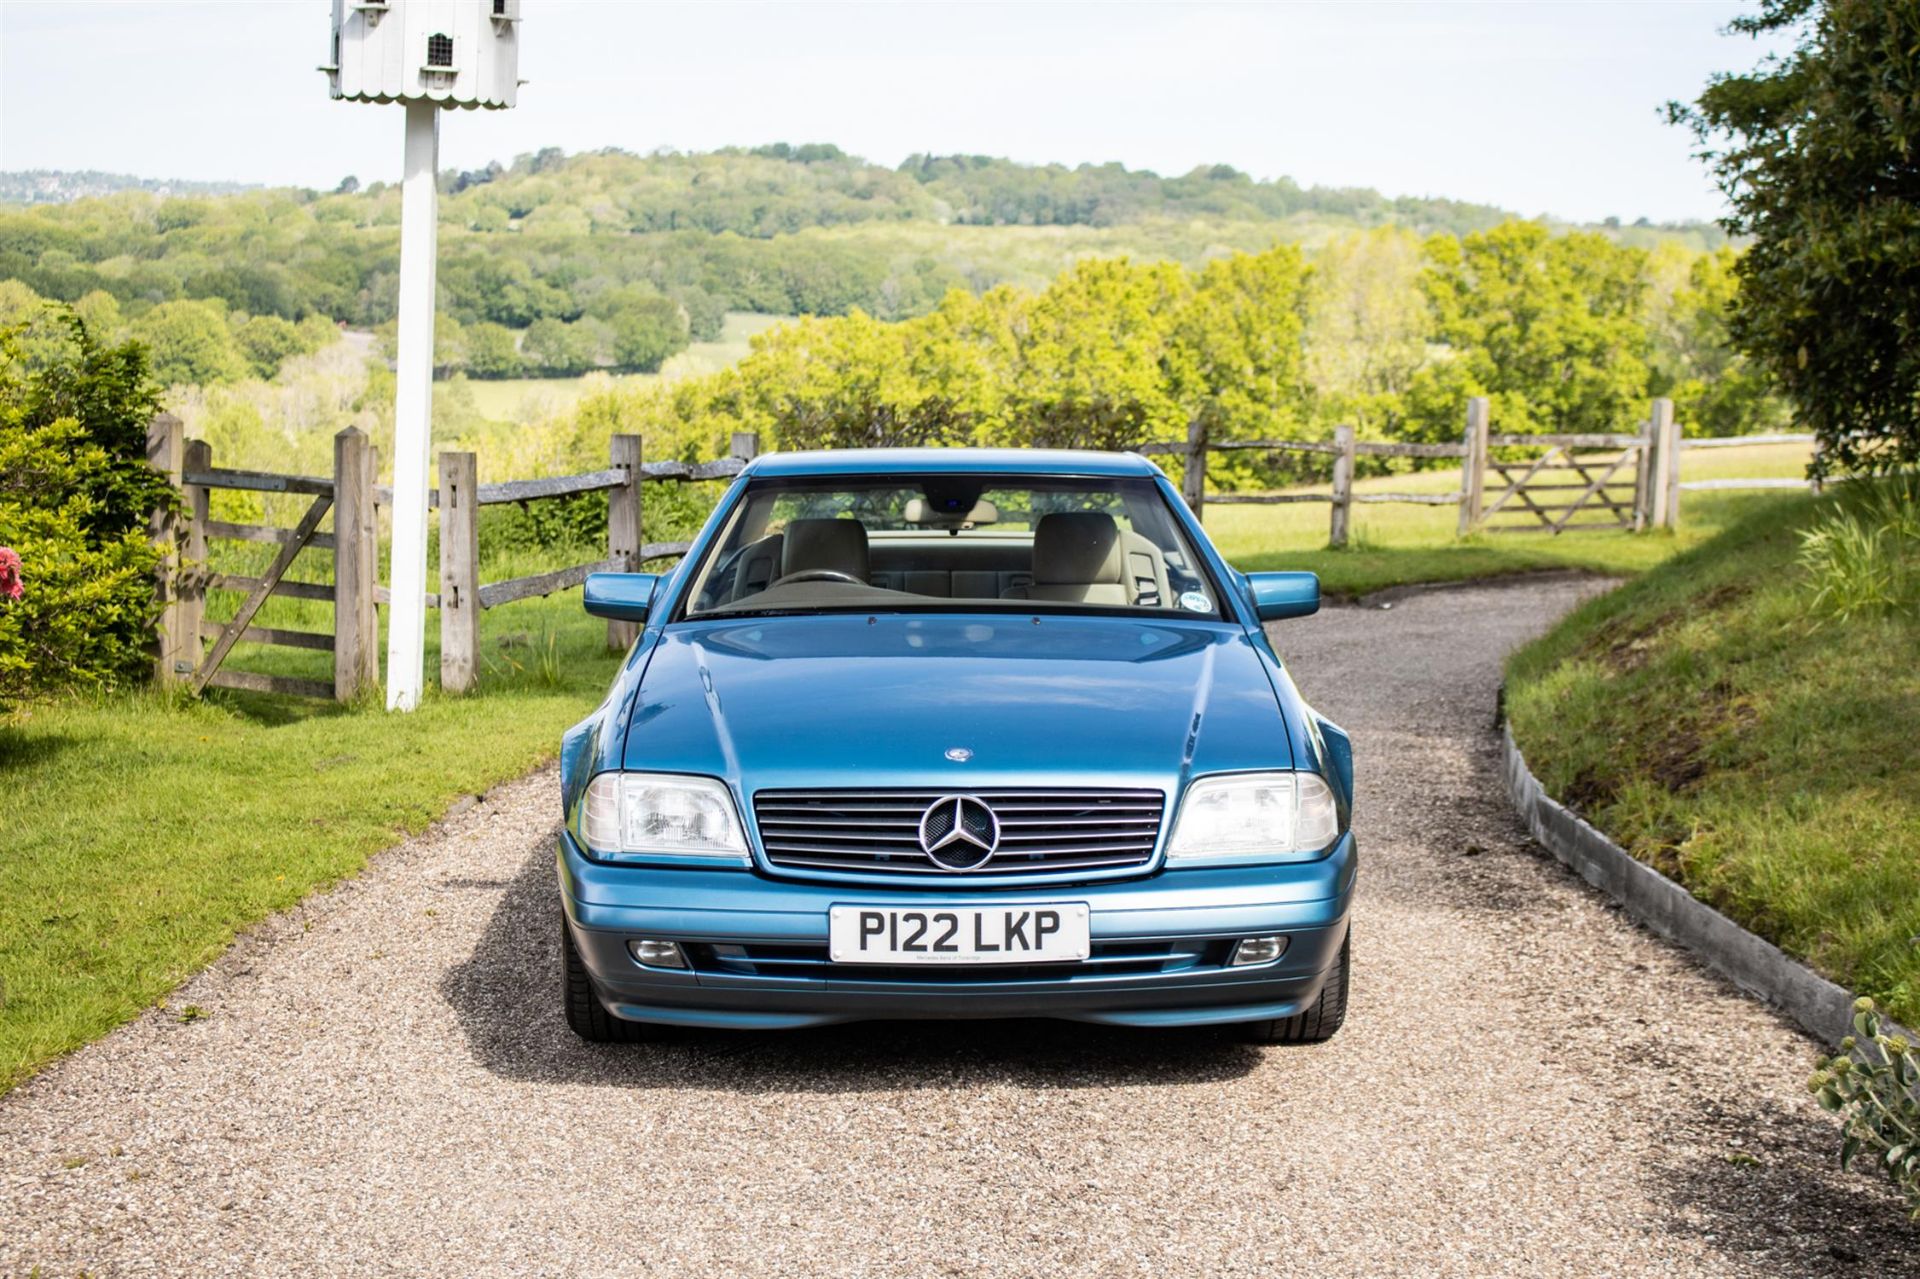 1997 Mercedes-Benz SL280 (R129) - Image 5 of 9